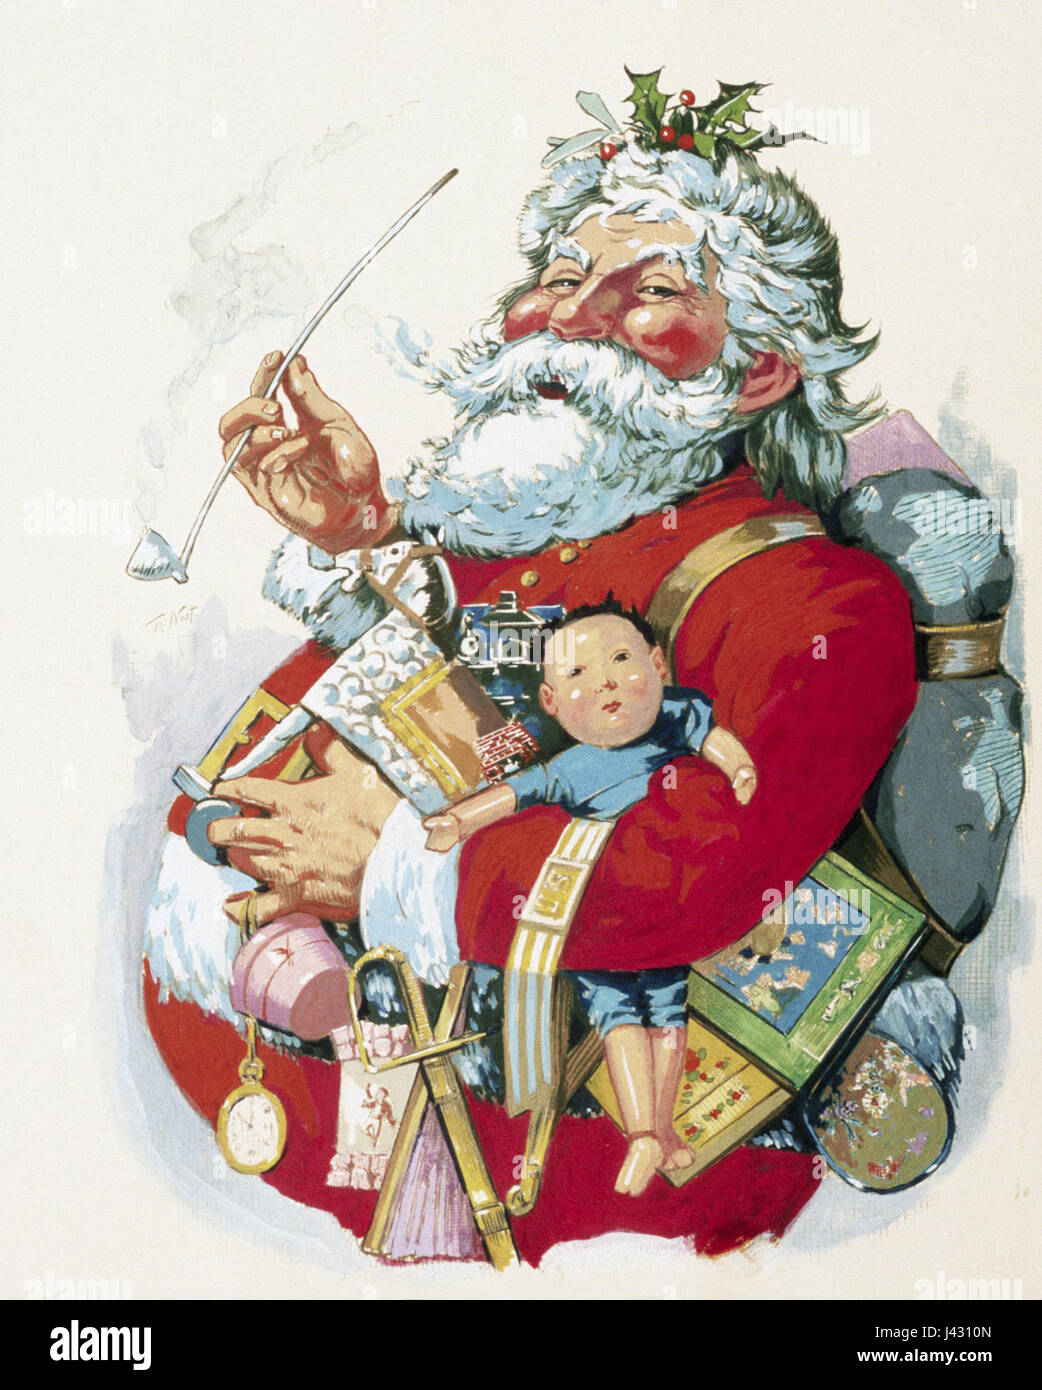 Merry Old Santa Claus by Thomas Nast Stock Photo